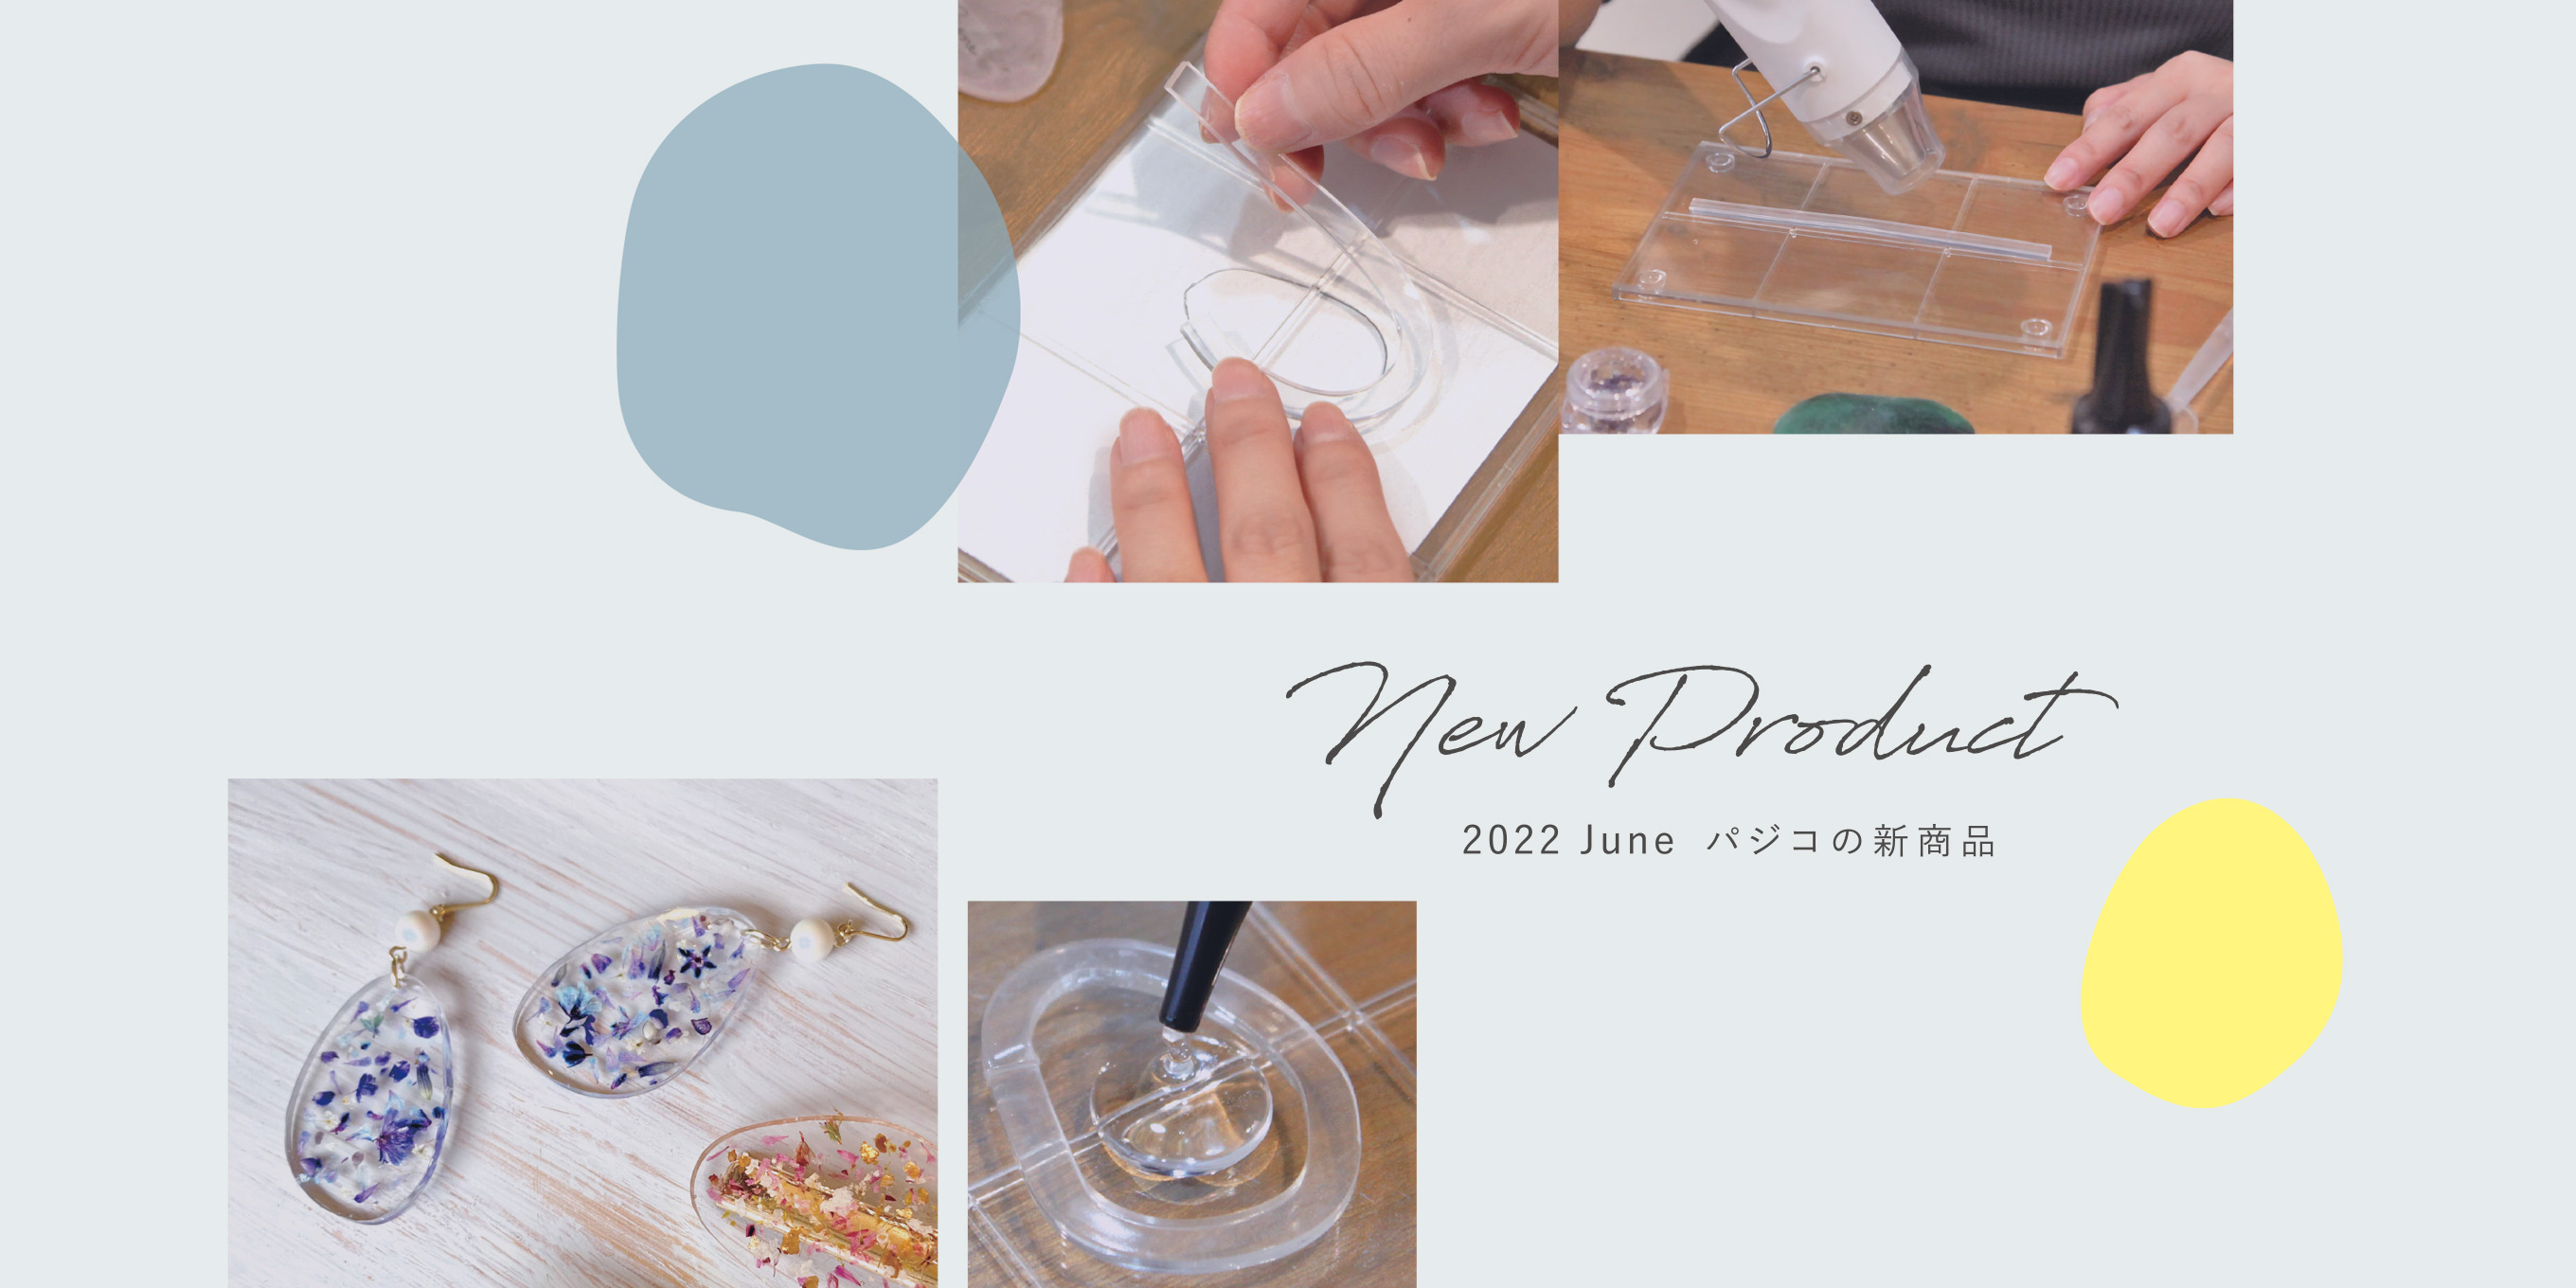 NEW PRODUCT 2022 JUNE　パジコの新商品